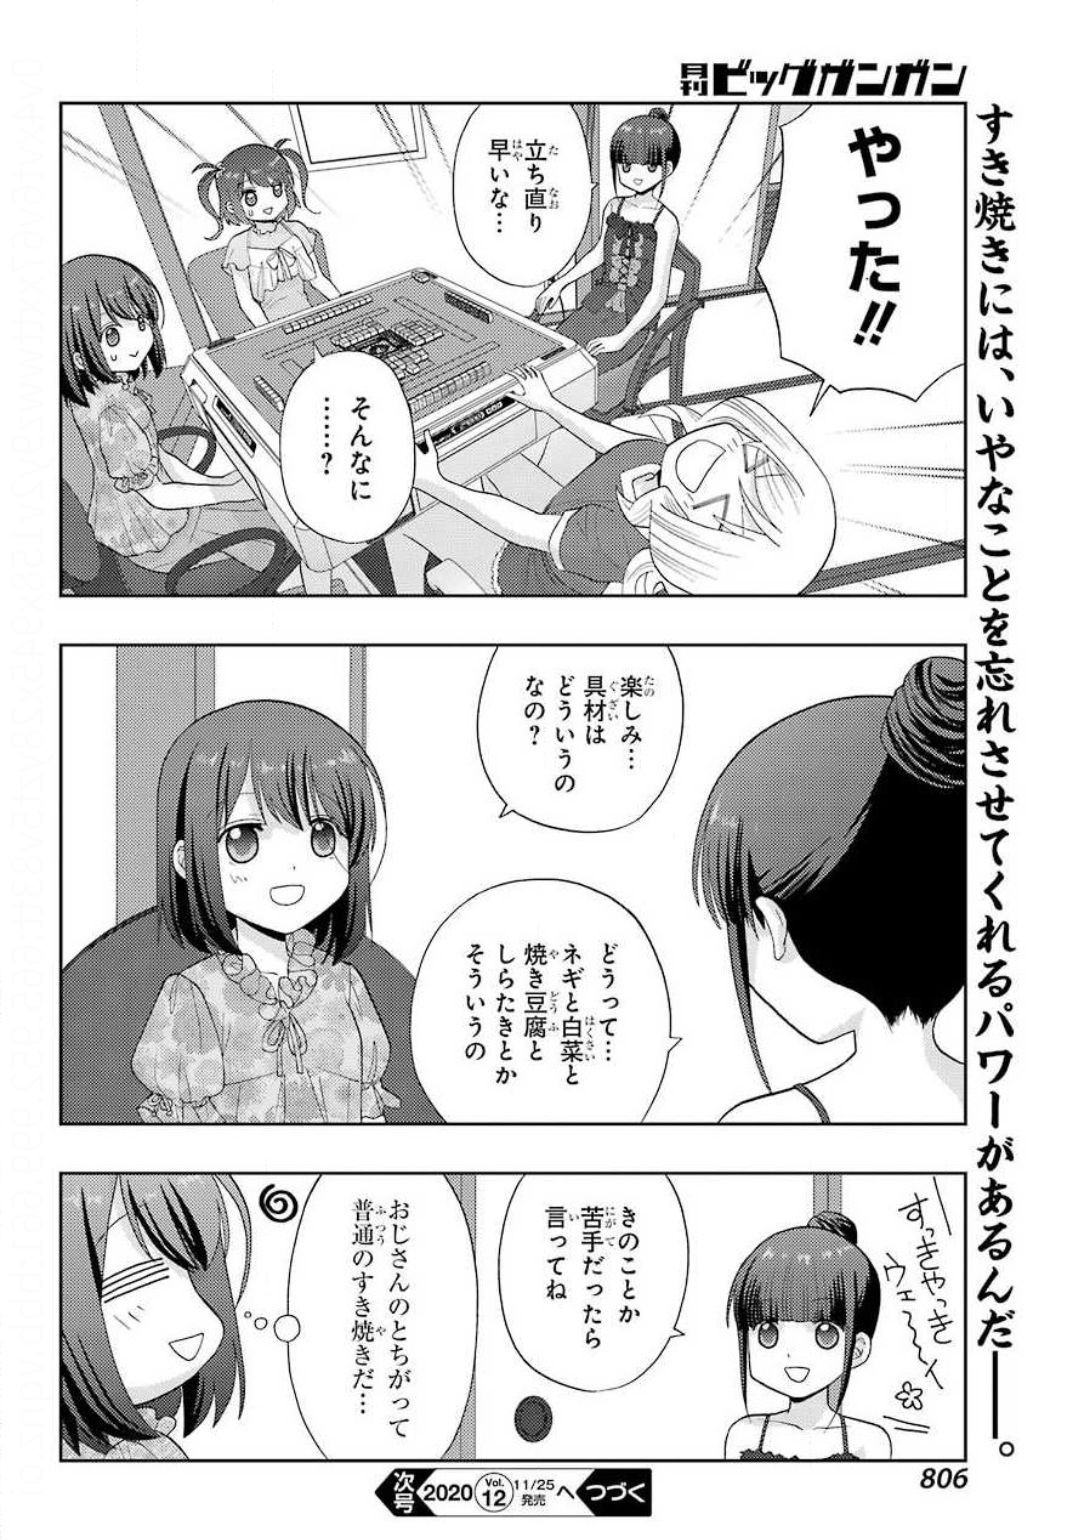 Shinohayu - The Dawn of Age Manga - Chapter 083 - Page 24